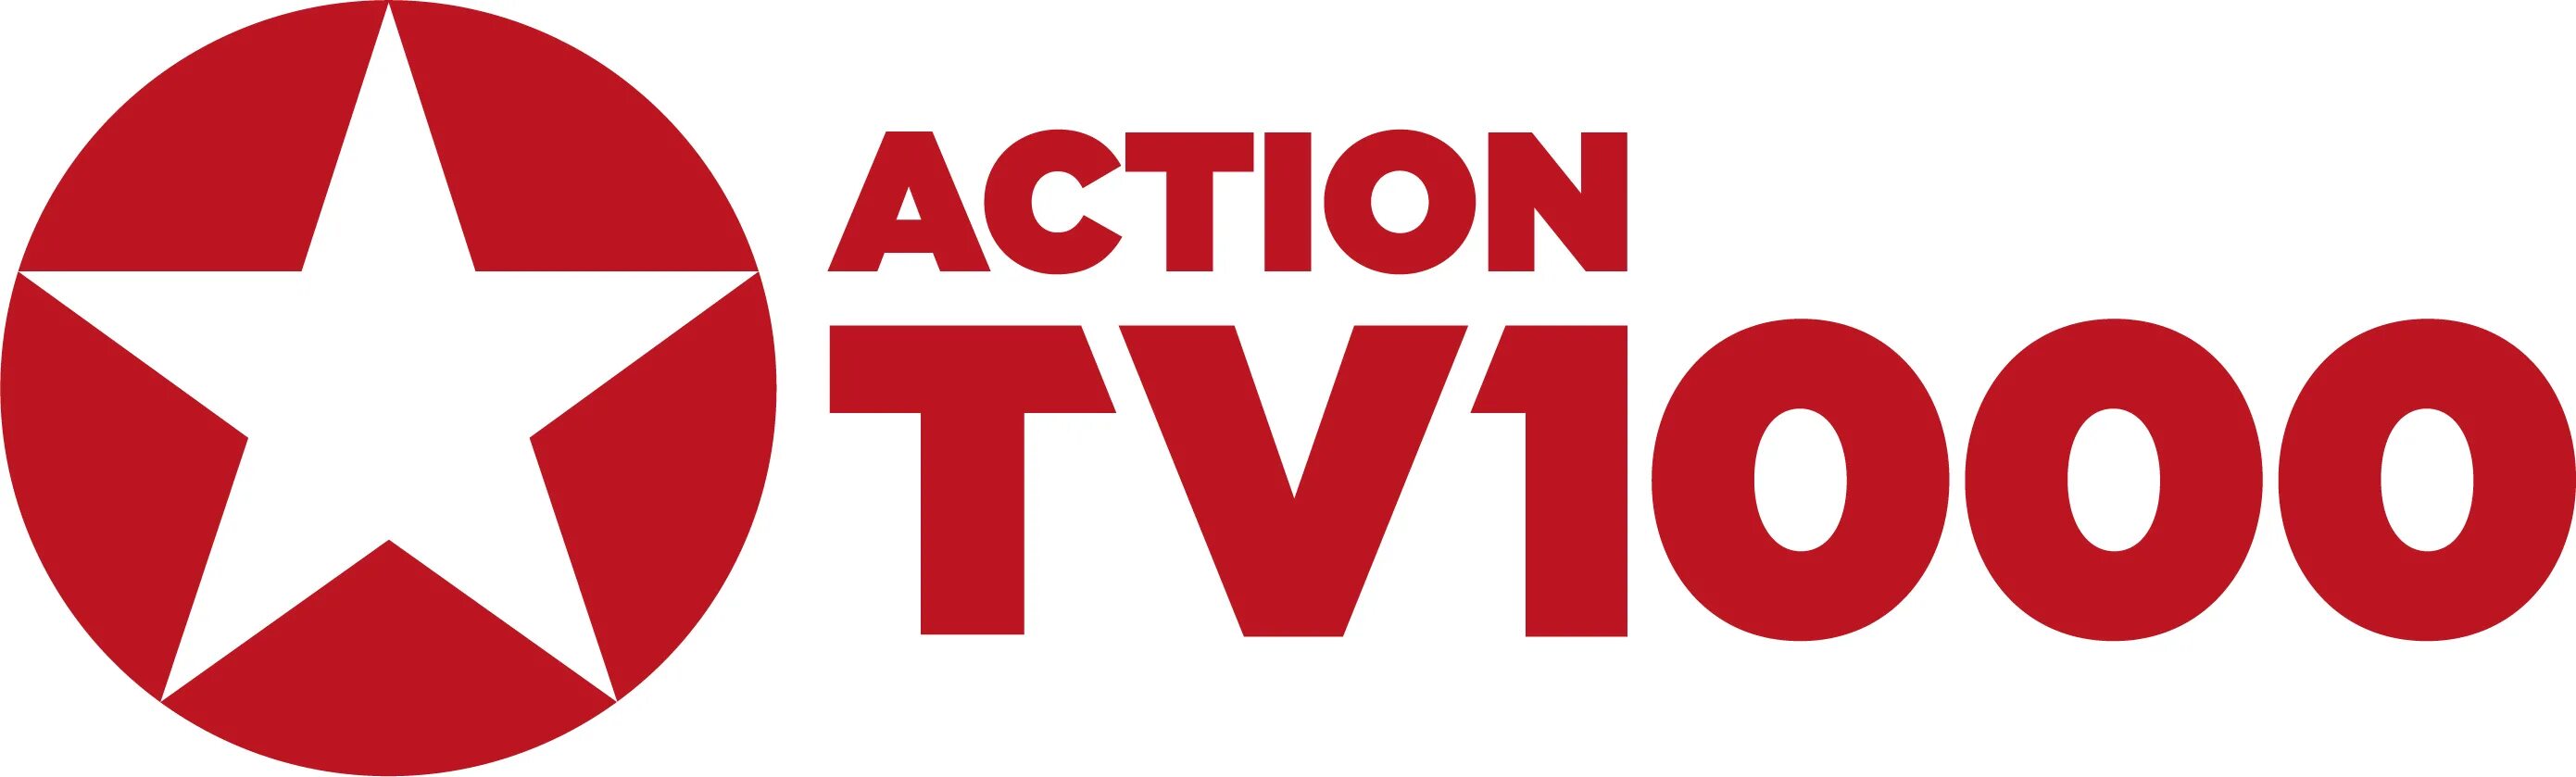 Tv1000. Tv1000 Action. Телеканал tv1000 Action. Логотип телеканала tv1000 Action.